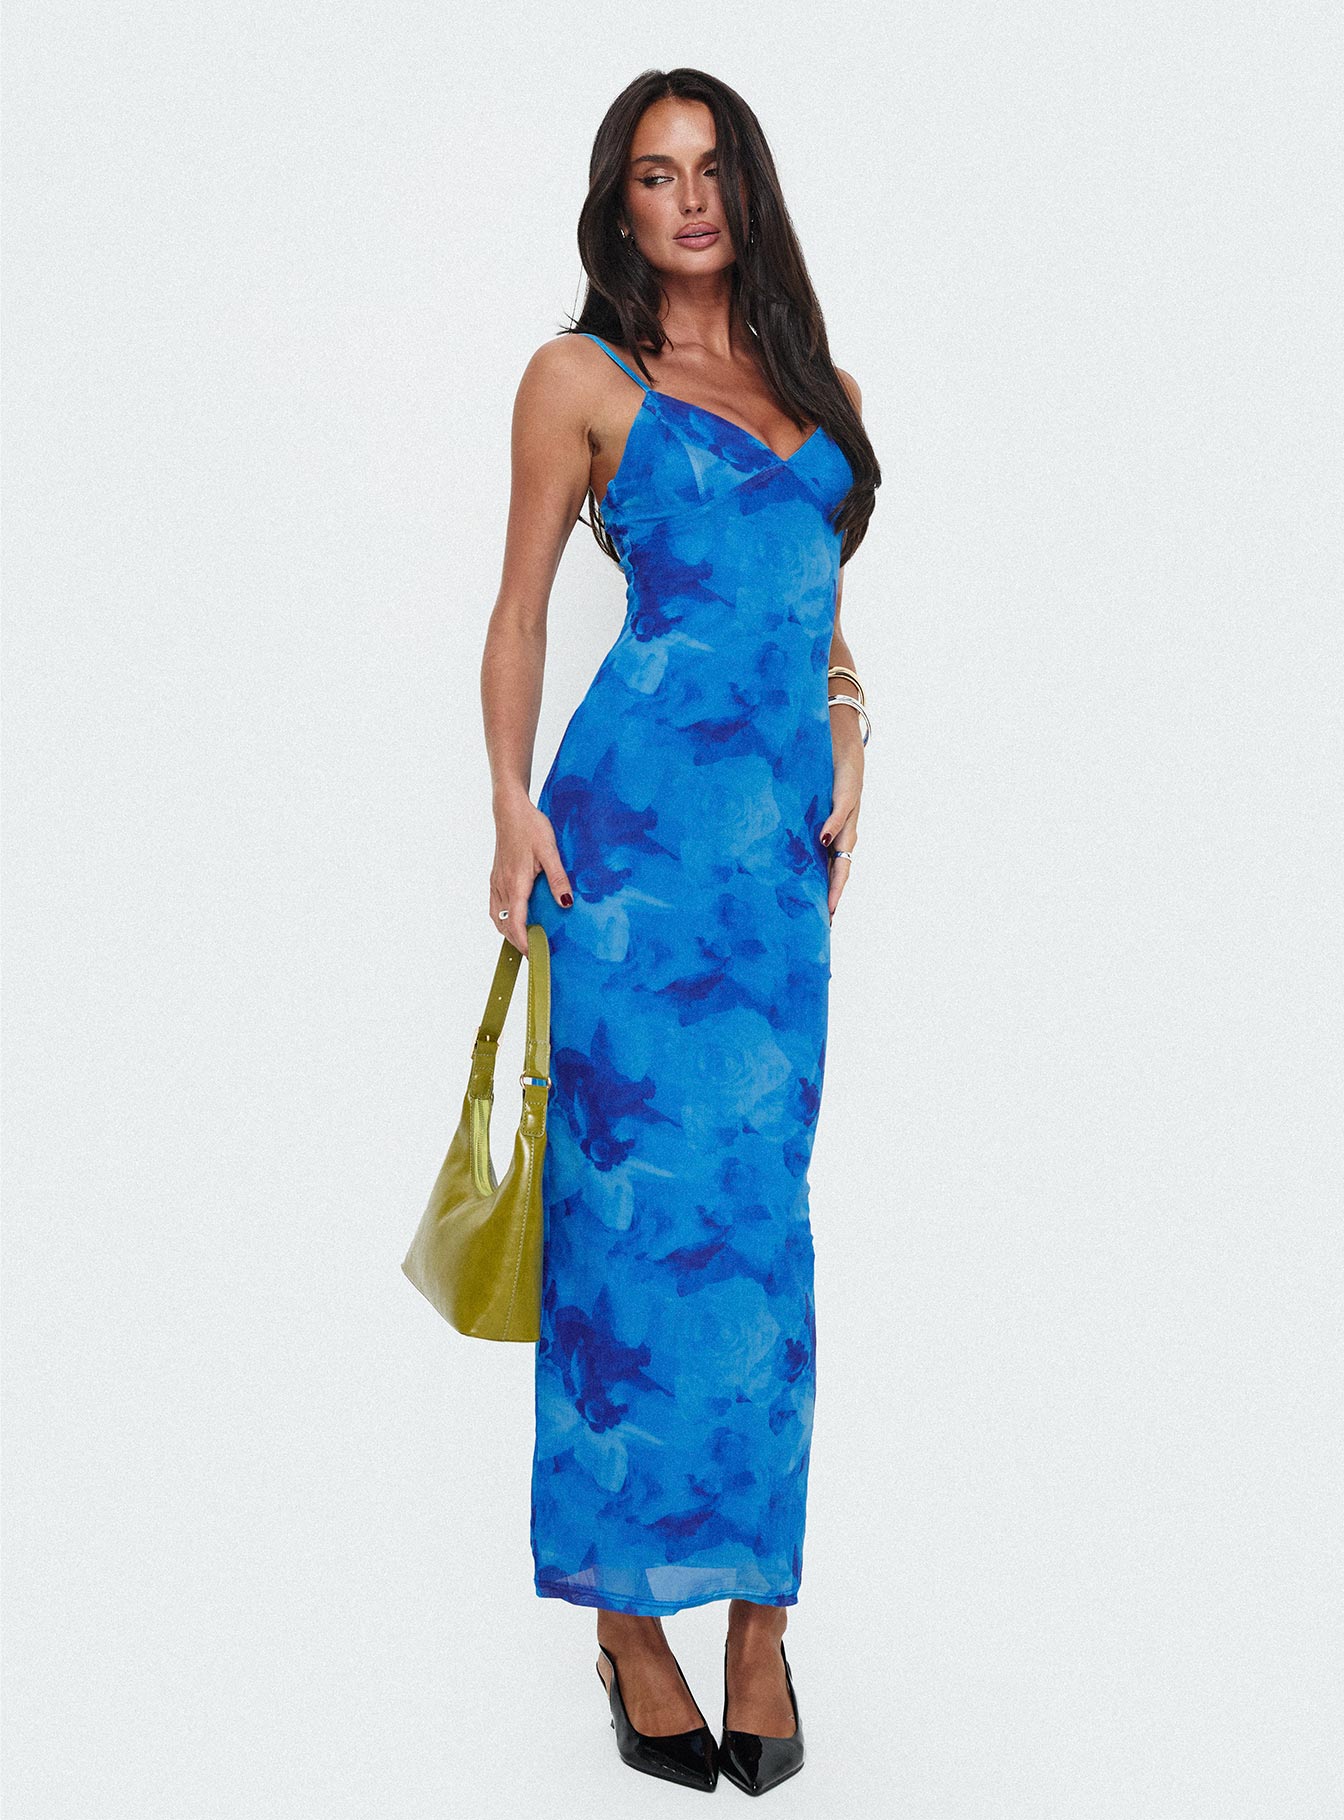 Shop Formal Dress - Hathaway Maxi Dress Blue Floral fourth image